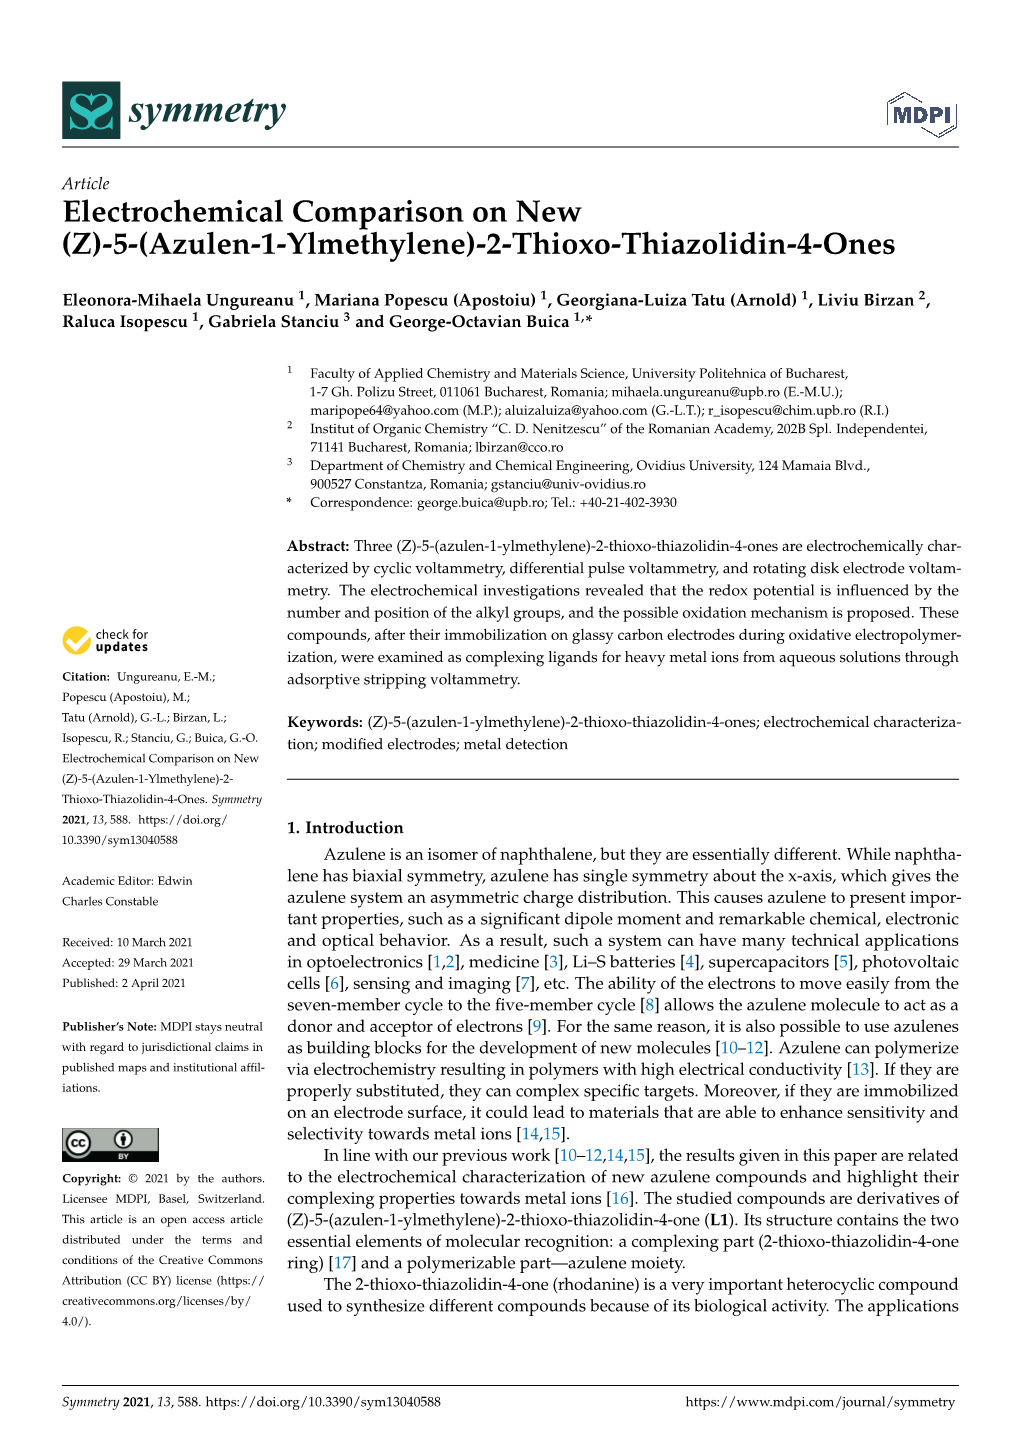 Electrochemical Comparison on New (Z)-5-(Azulen-1-Ylmethylene)-2-Thioxo-Thiazolidin-4-Ones